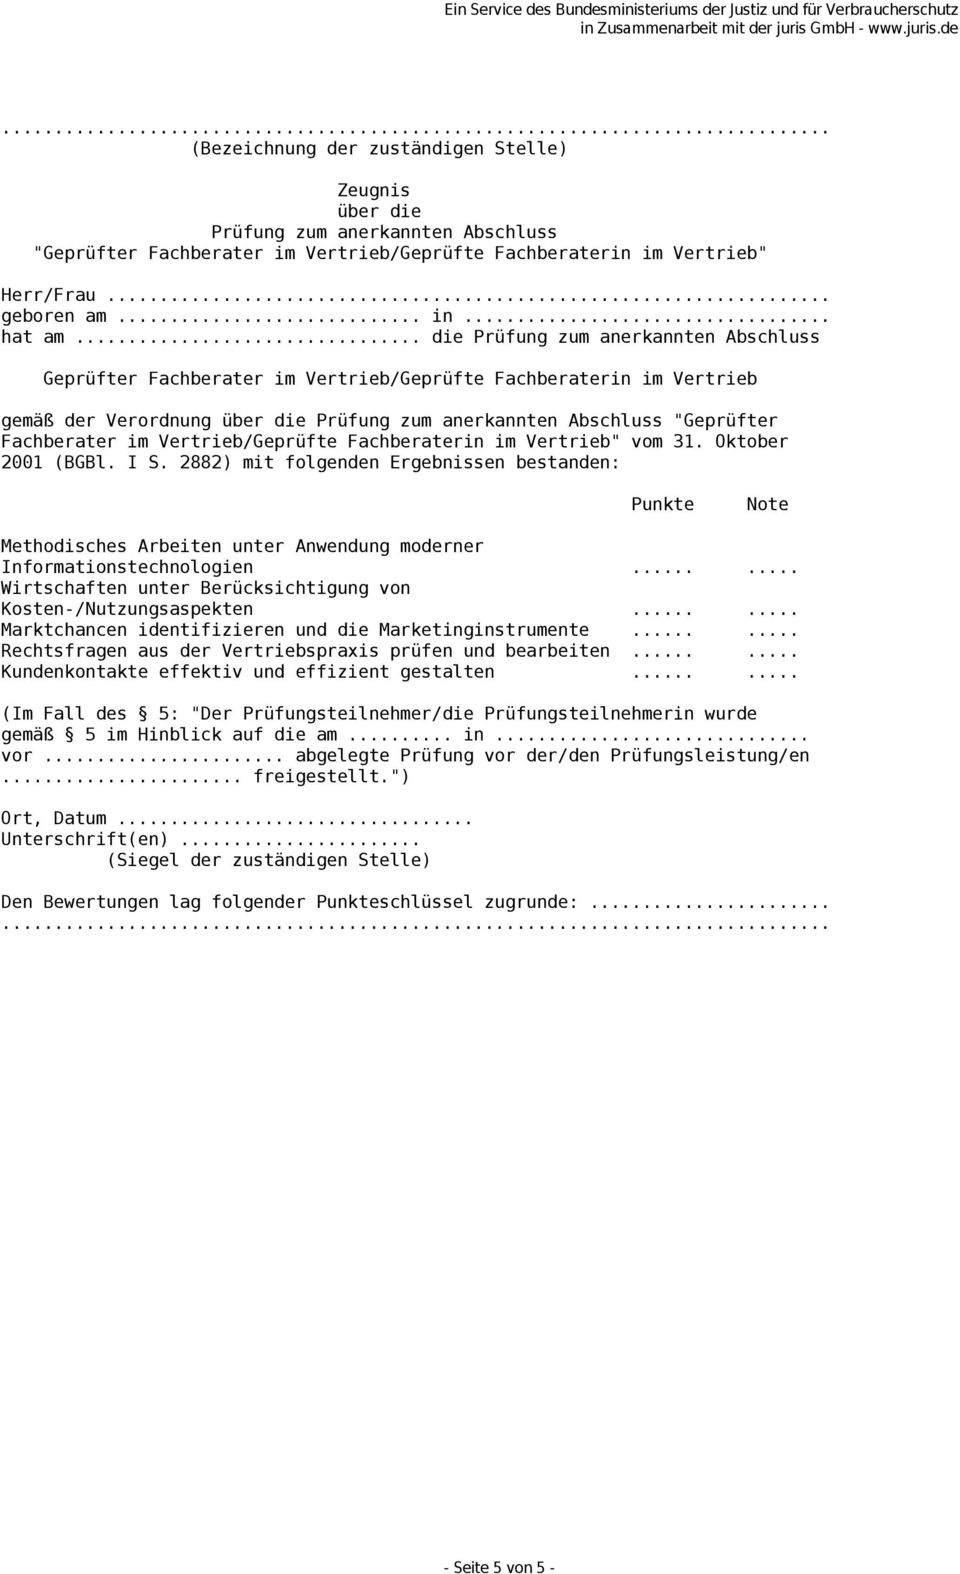 Vertrieb/Geprüfte Fachberaterin im Vertrieb" vom 31. Oktober 2001 (BGBl. I S.